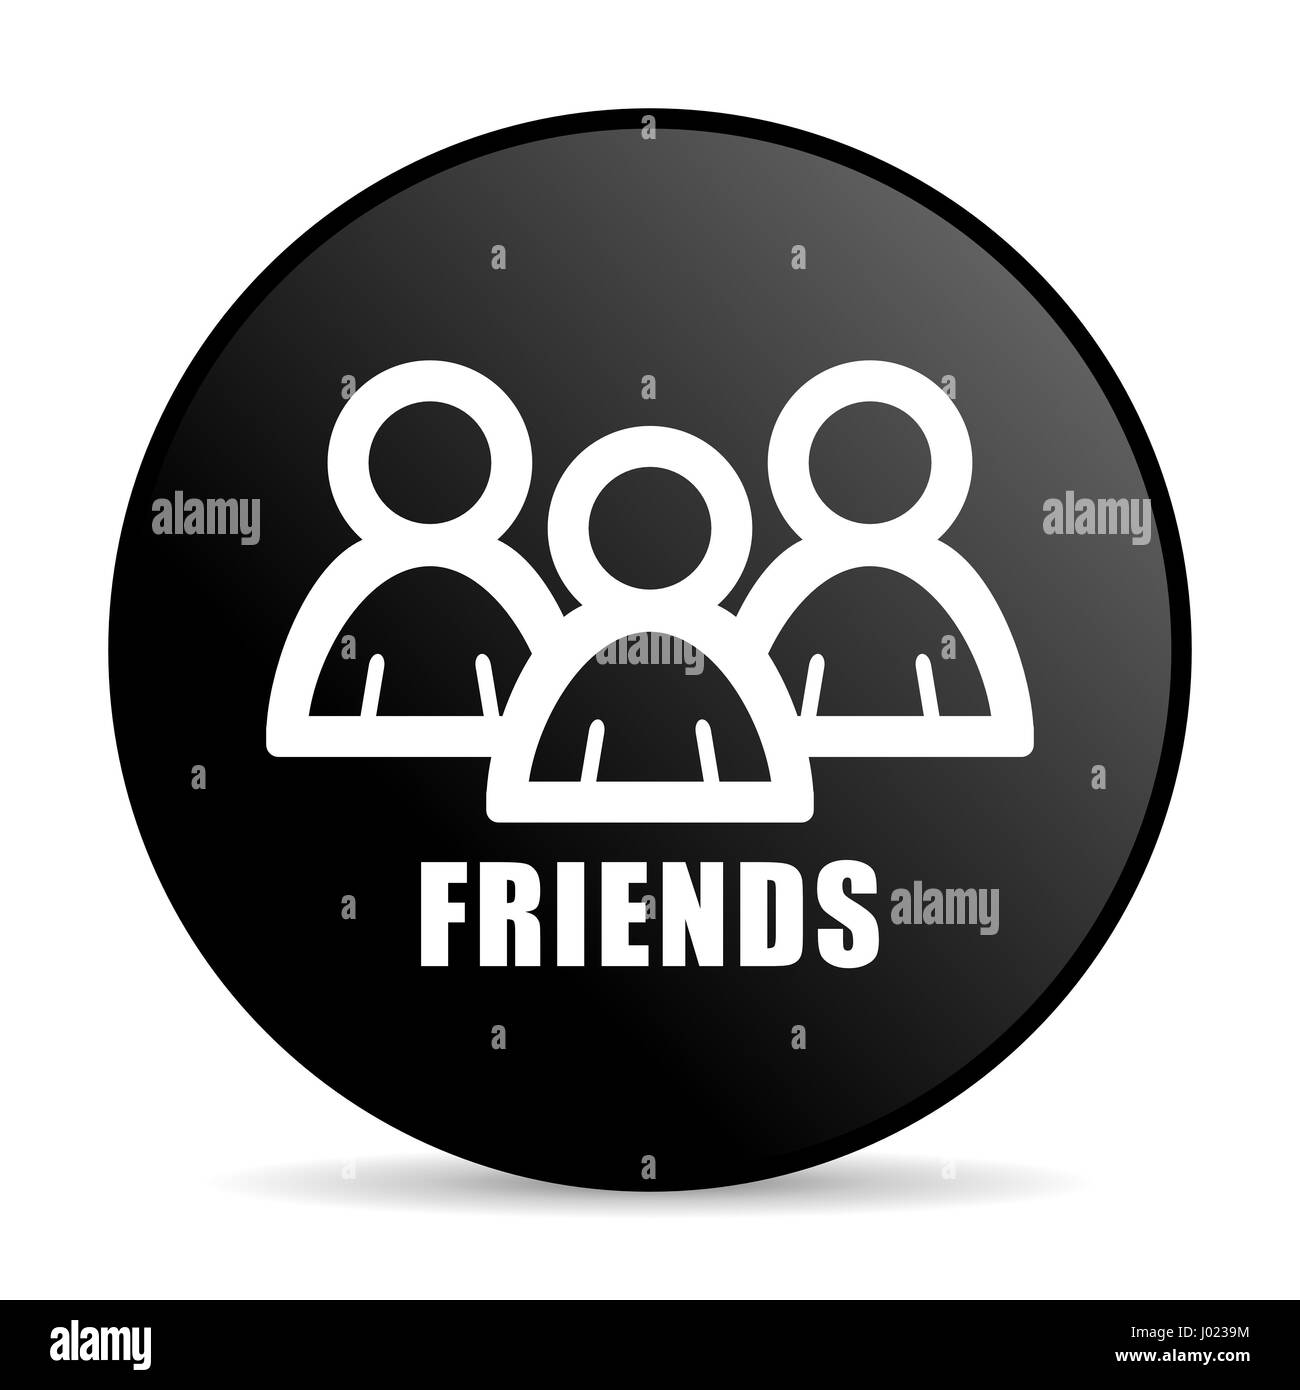 Friends black color web design round internet icon on white background  Stock Photo - Alamy